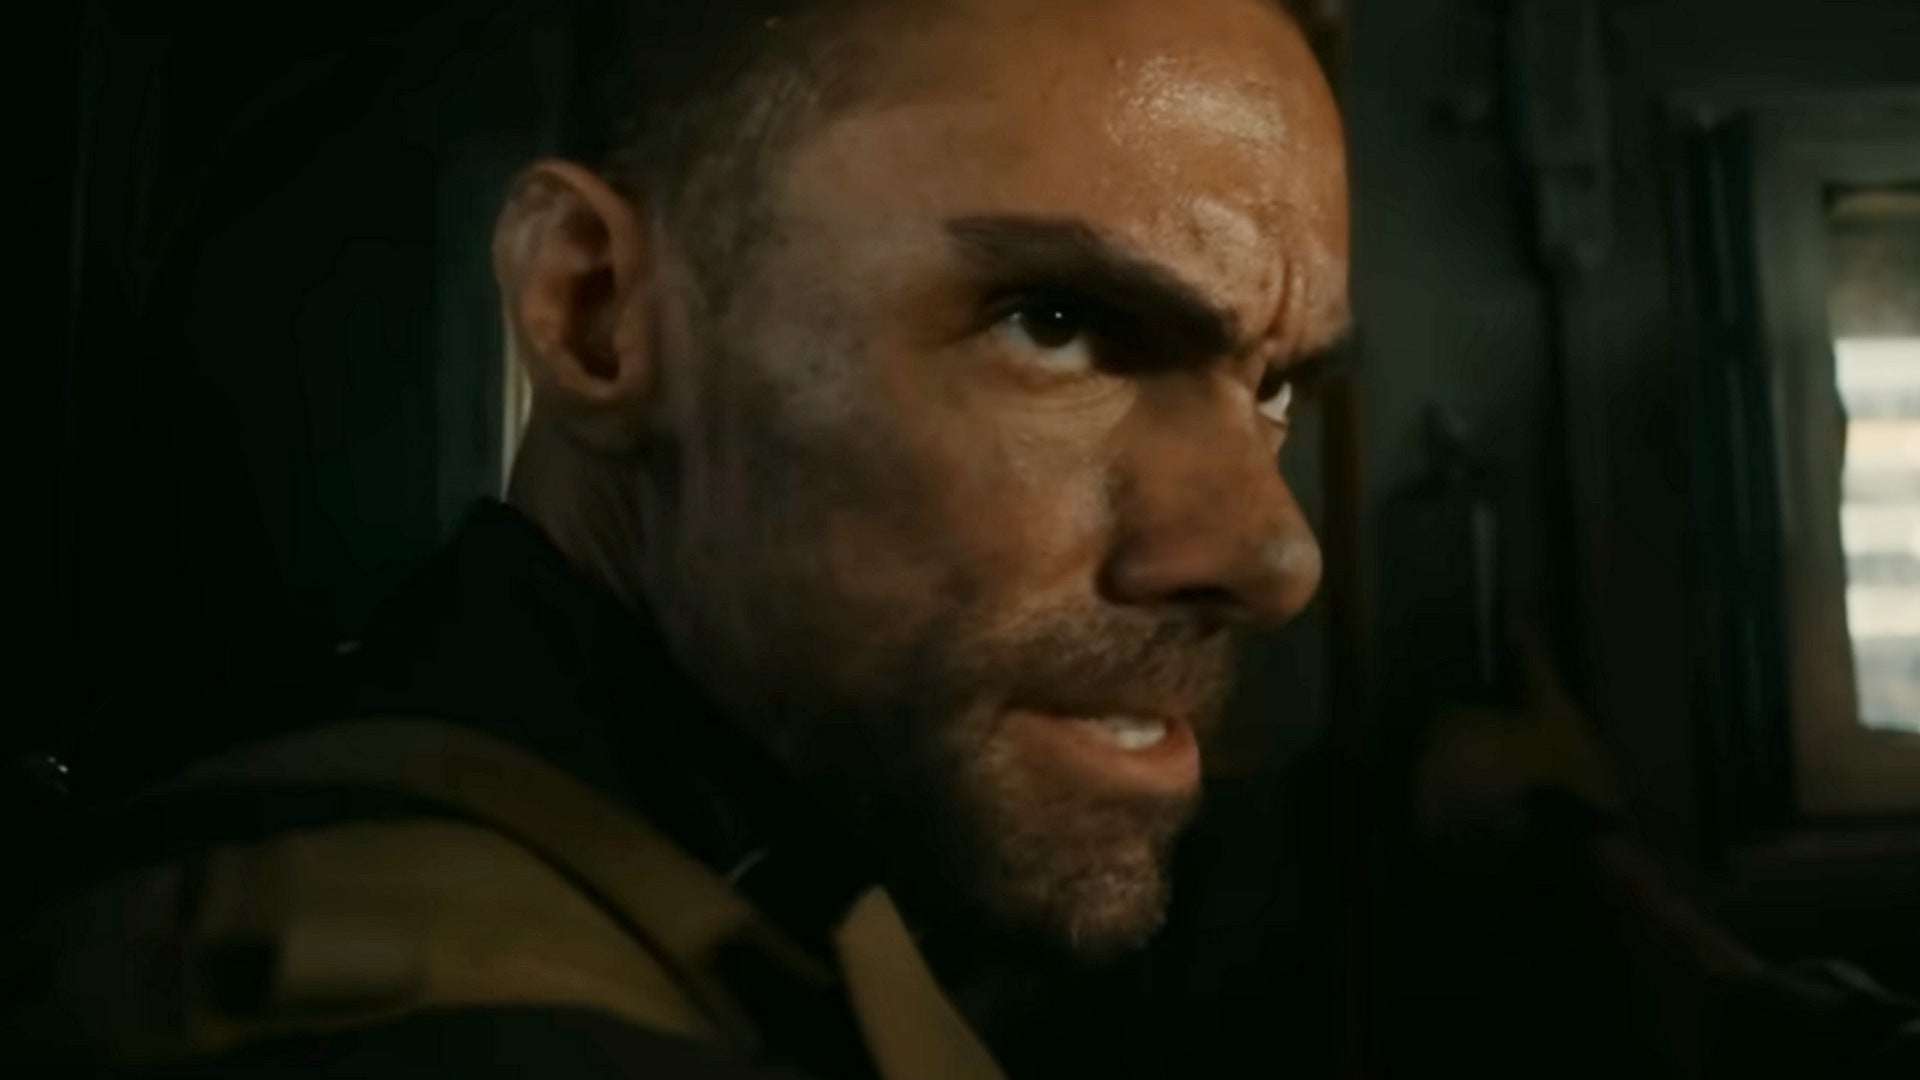 Bilder zu Call of Duty Modern Warfare 2: Reveal heute um 19 Uhr - Hier anschauen